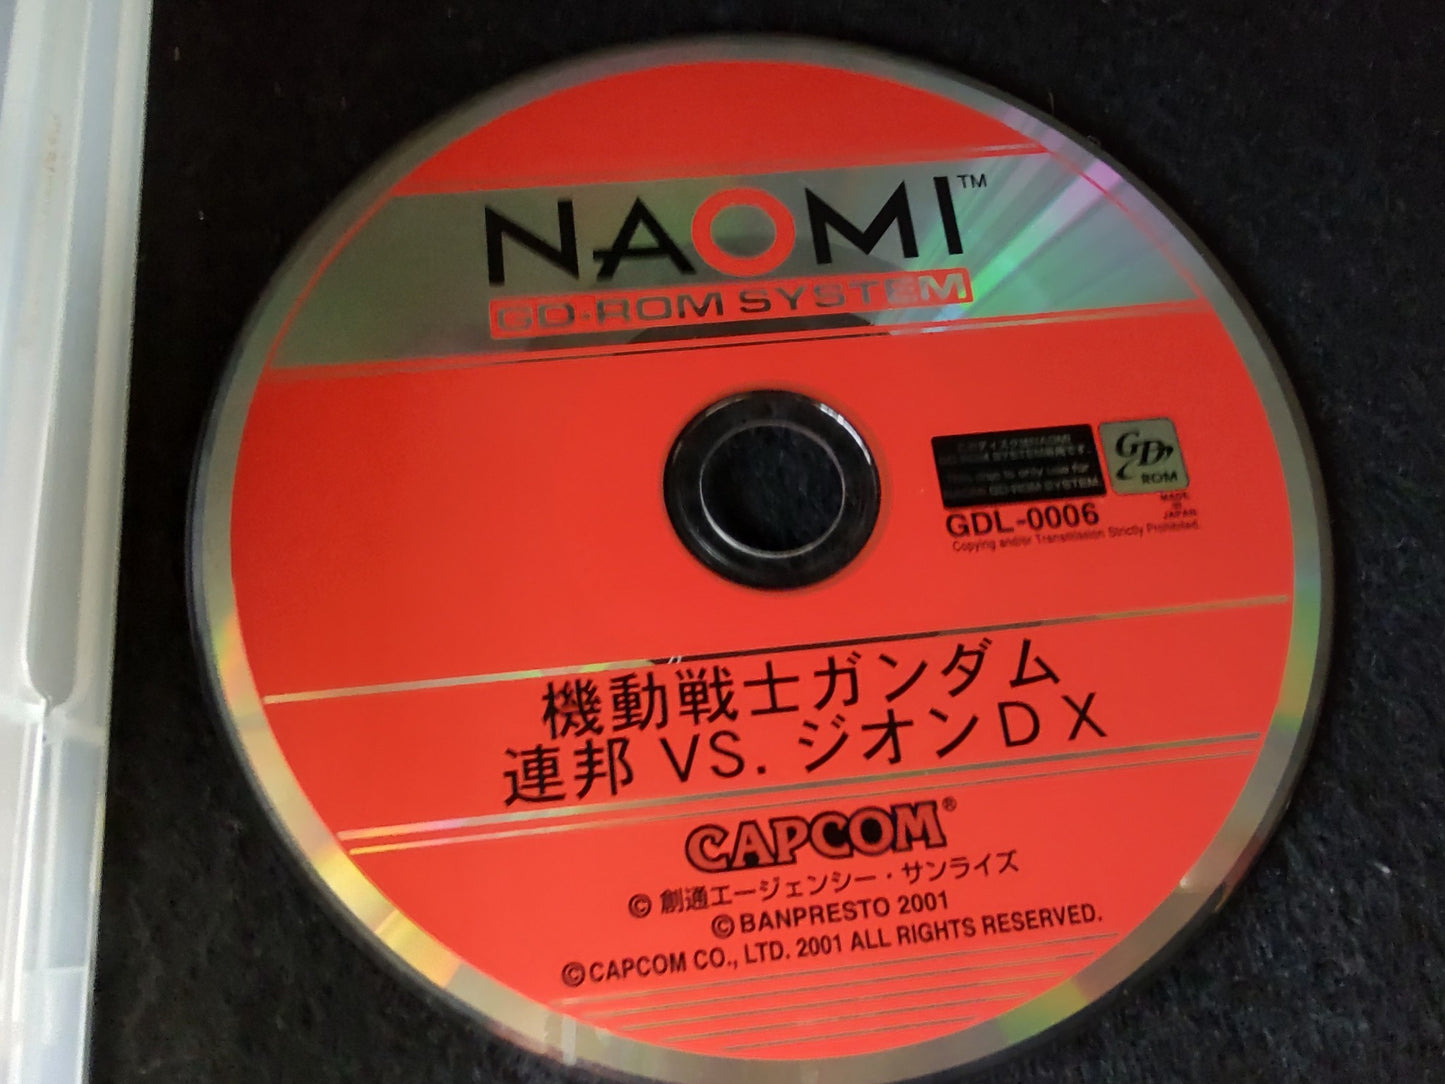 Mobile Suit Gundam: Federation vs Zeon DX NAOMI GD-ROM Disk, KEY chip set-f0509